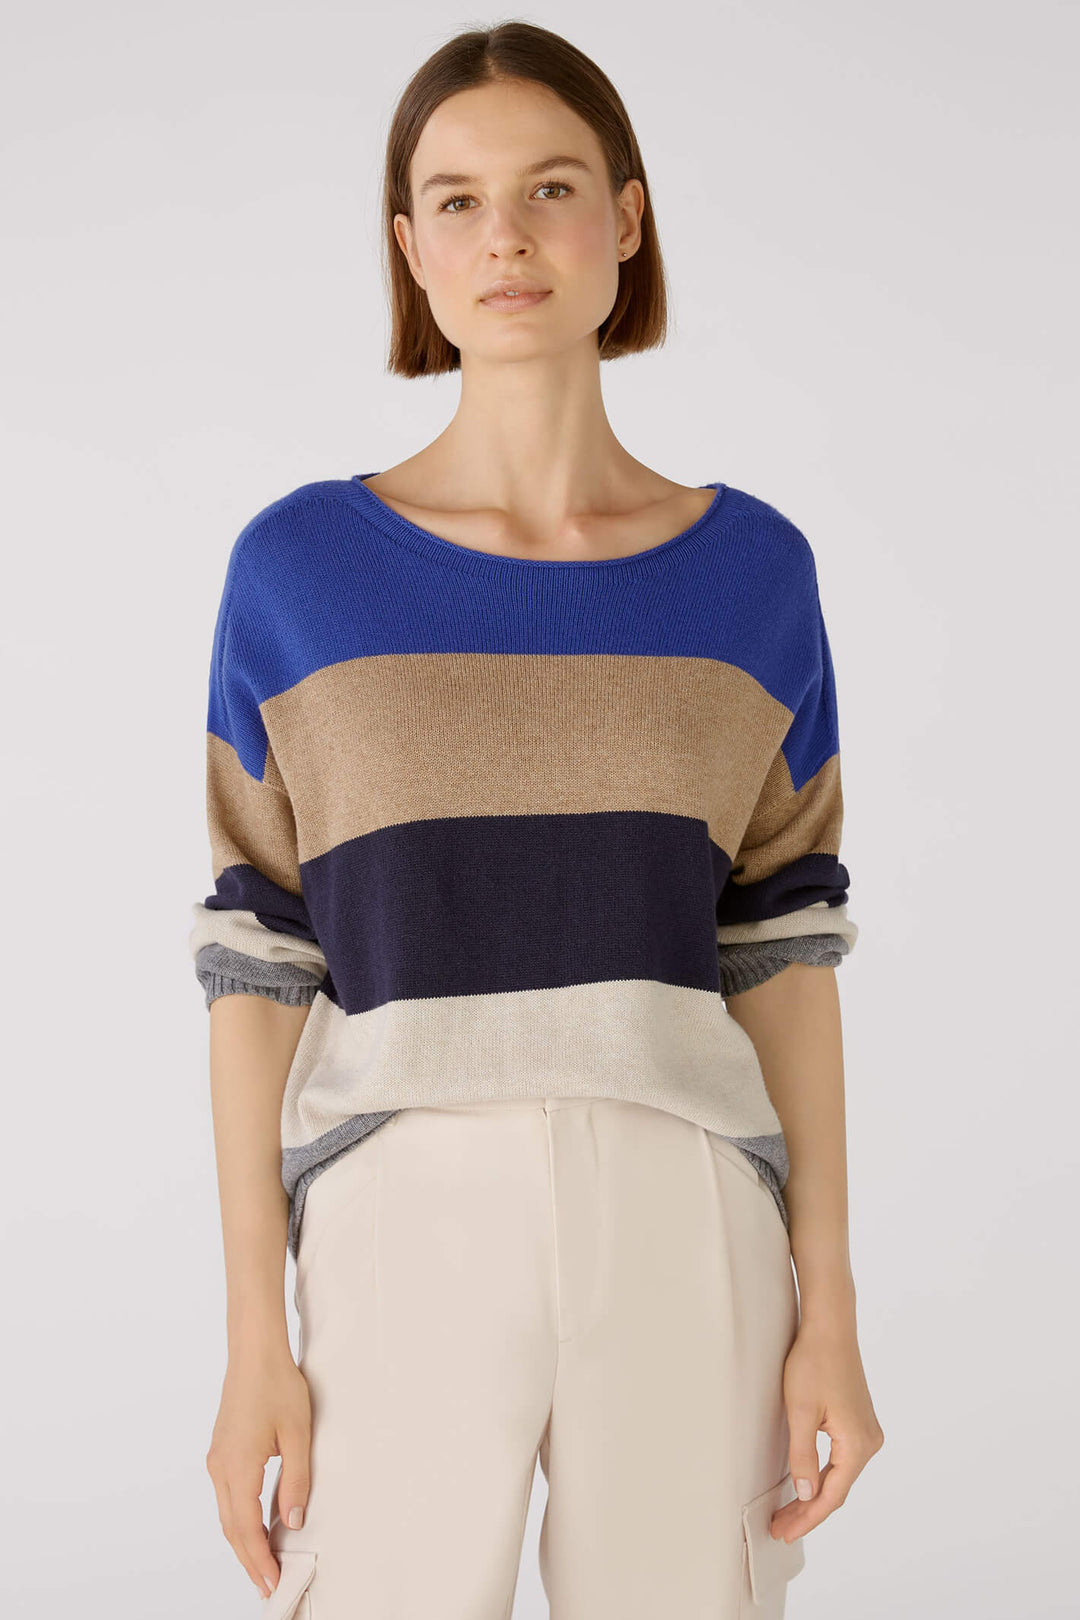 Oui 79351 Blue Stone Wide Stripe Jumper - Olivia Grace Fashion